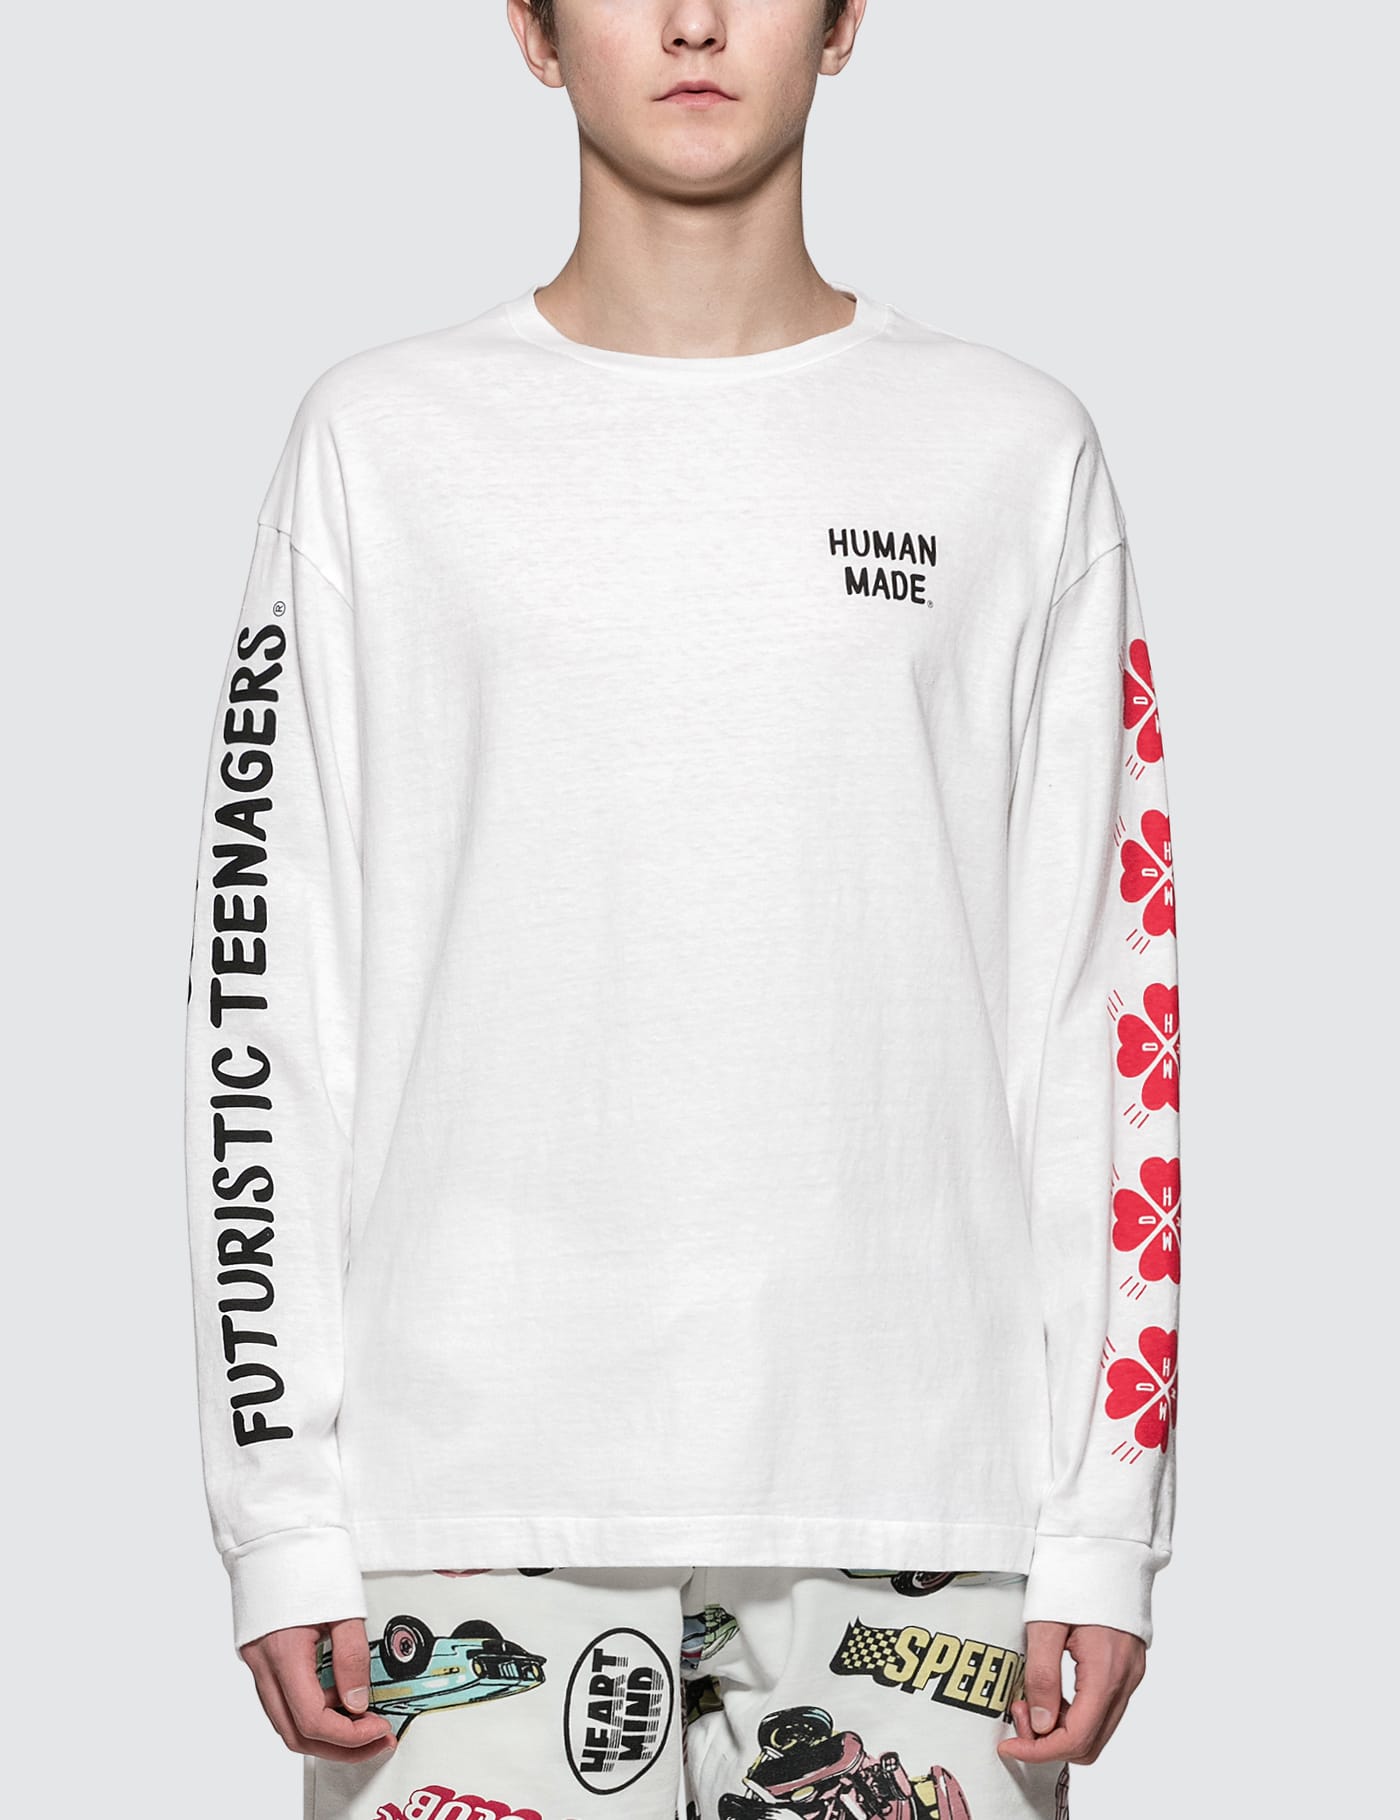 Human Made - White Screen Printed sleeve L/S T-Shirt | HBX